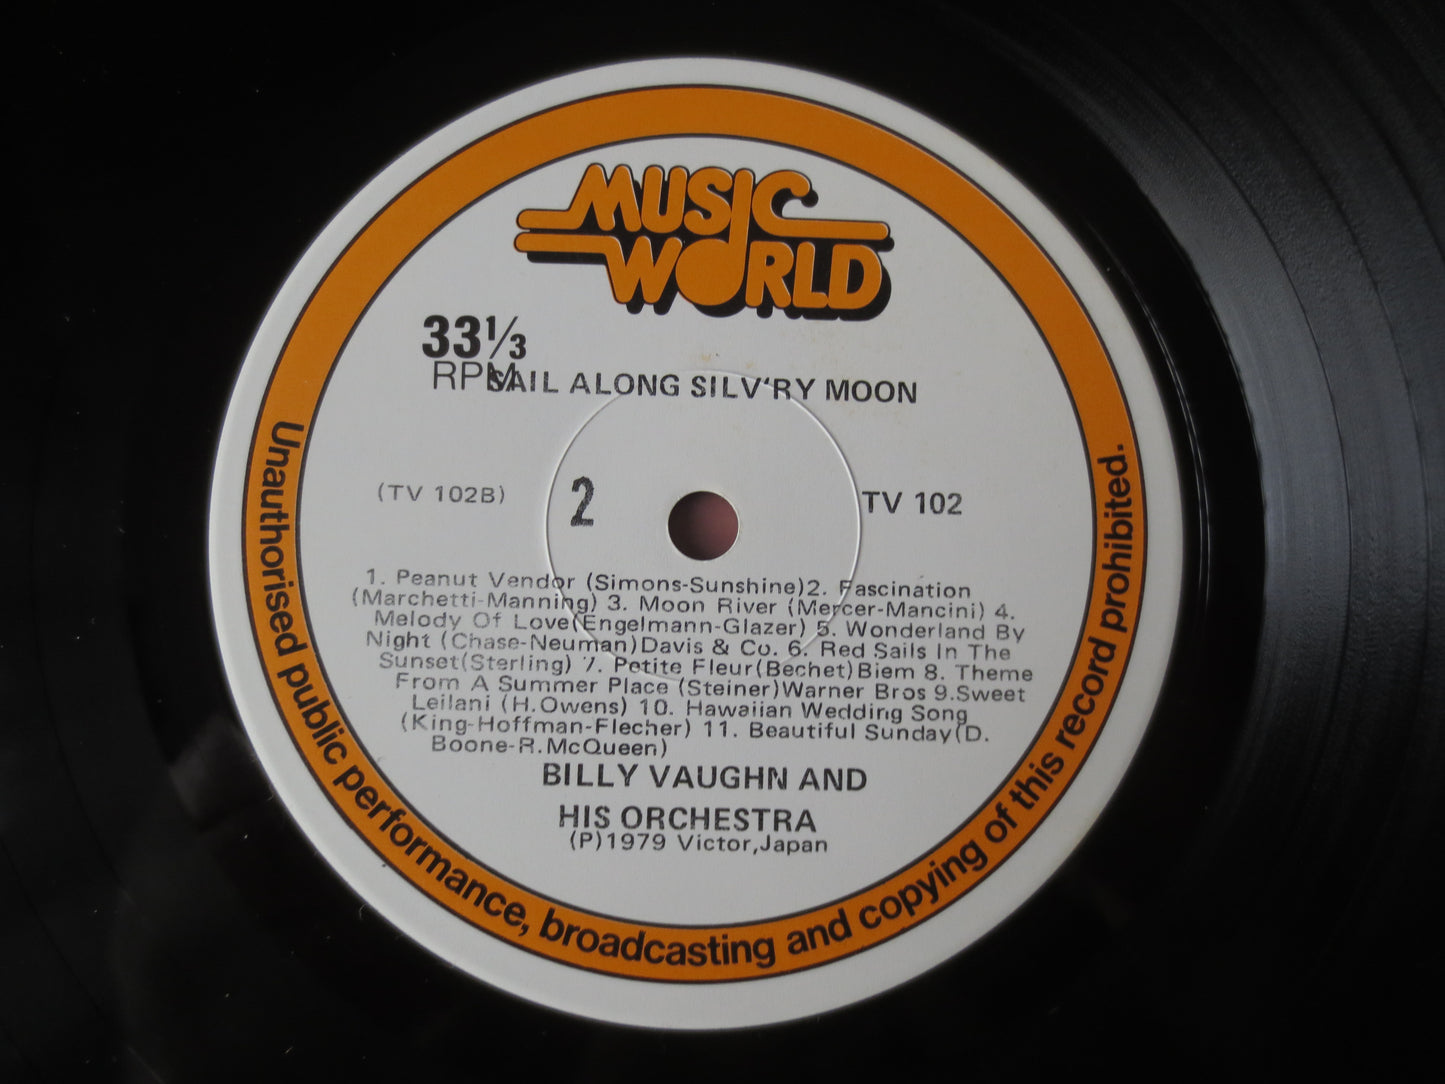 BILLY VAUGHN, 42 GOLDEN Hits, Billy Vaughn Record, Vintage Vinyl, Billy Vaughn Albums, Vinyl Album, Vinyl Lp, 1982 Records